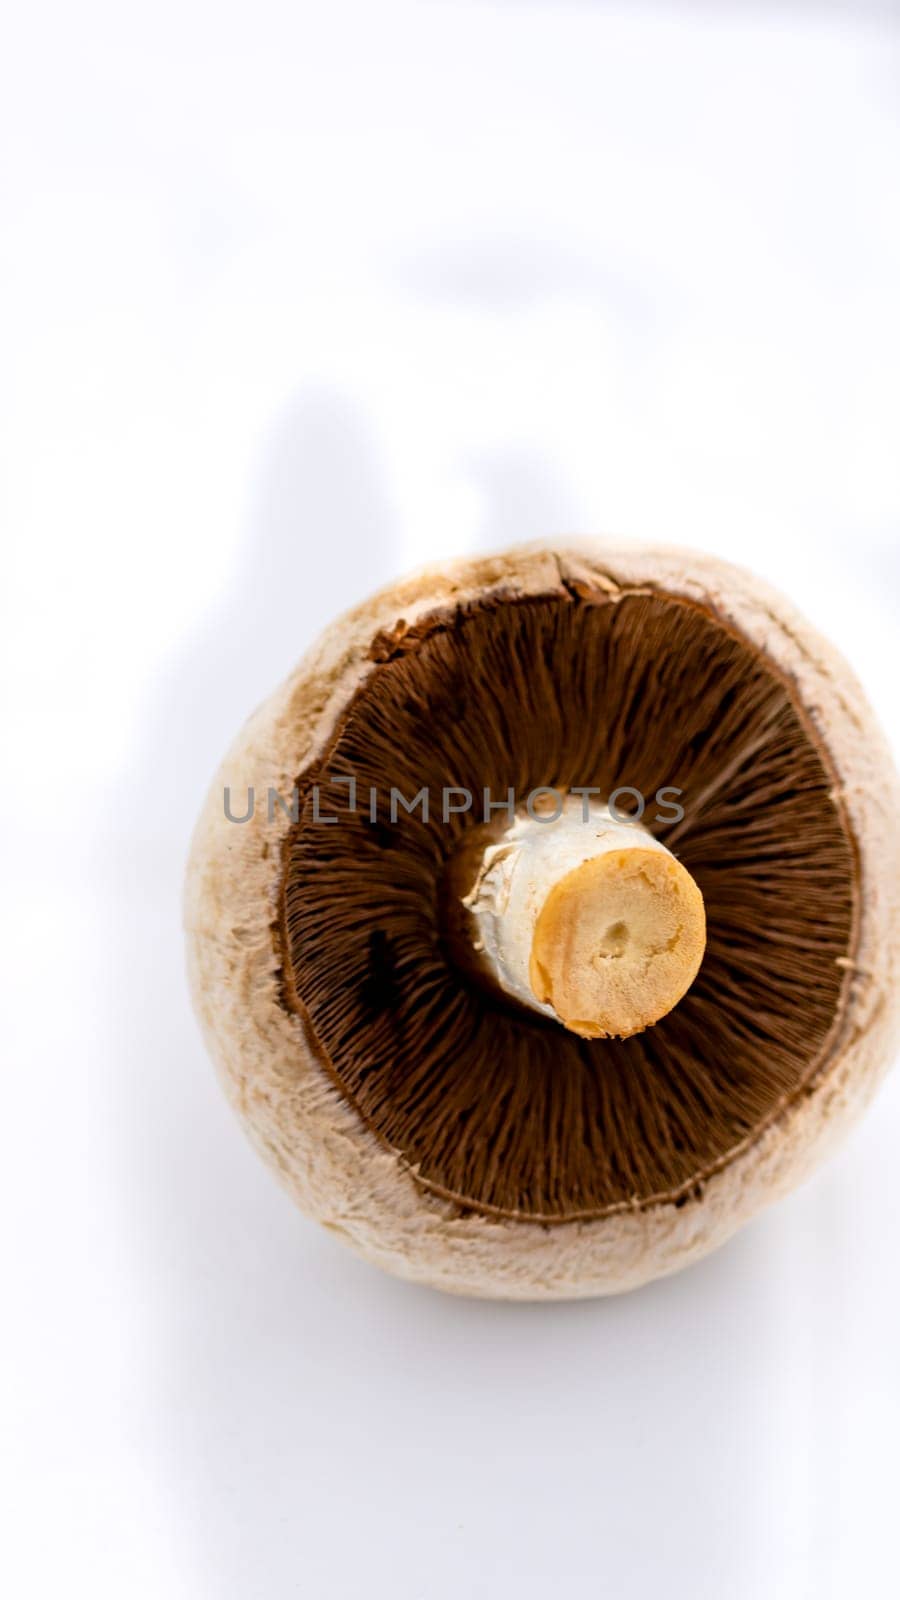 Fresh champignons, champignon mushrooms, close-up, isolated by vladispas